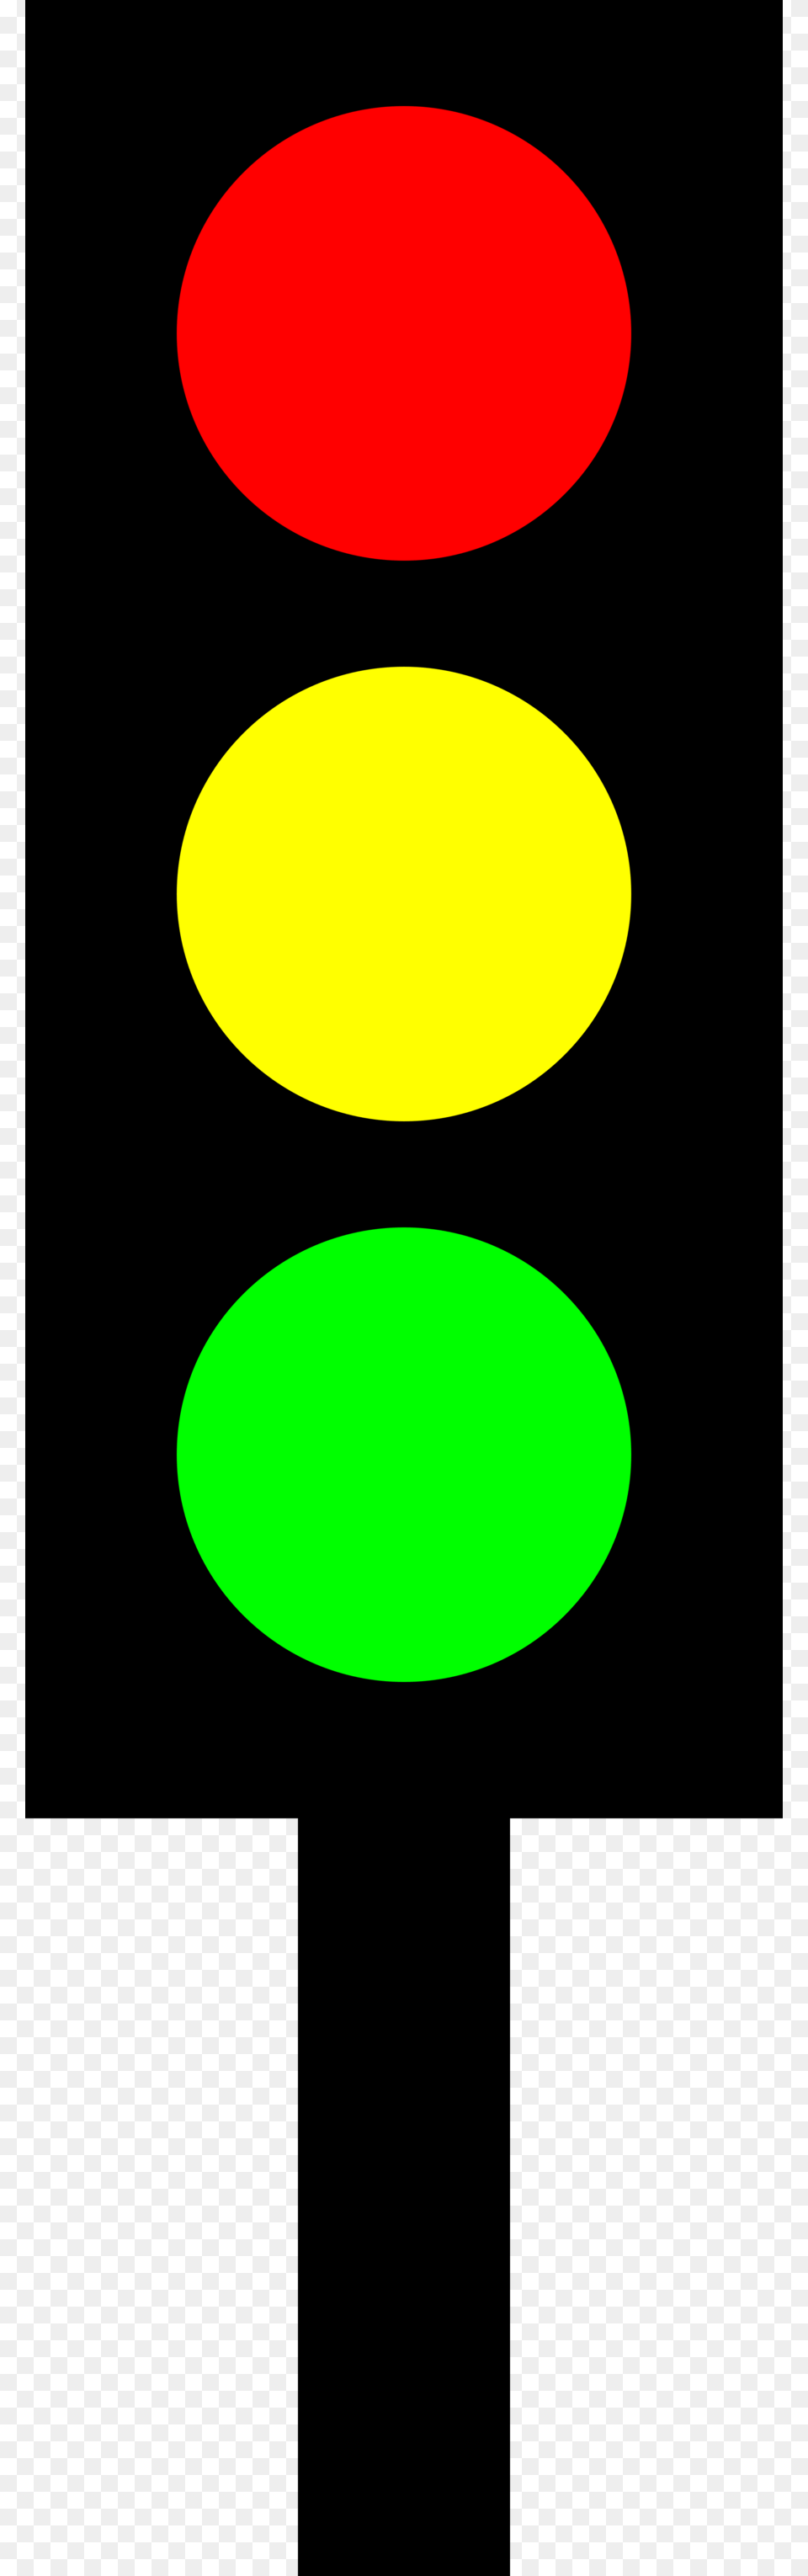 Traffic Light Icon Clipart Traffic Light Computer, Traffic Light Png